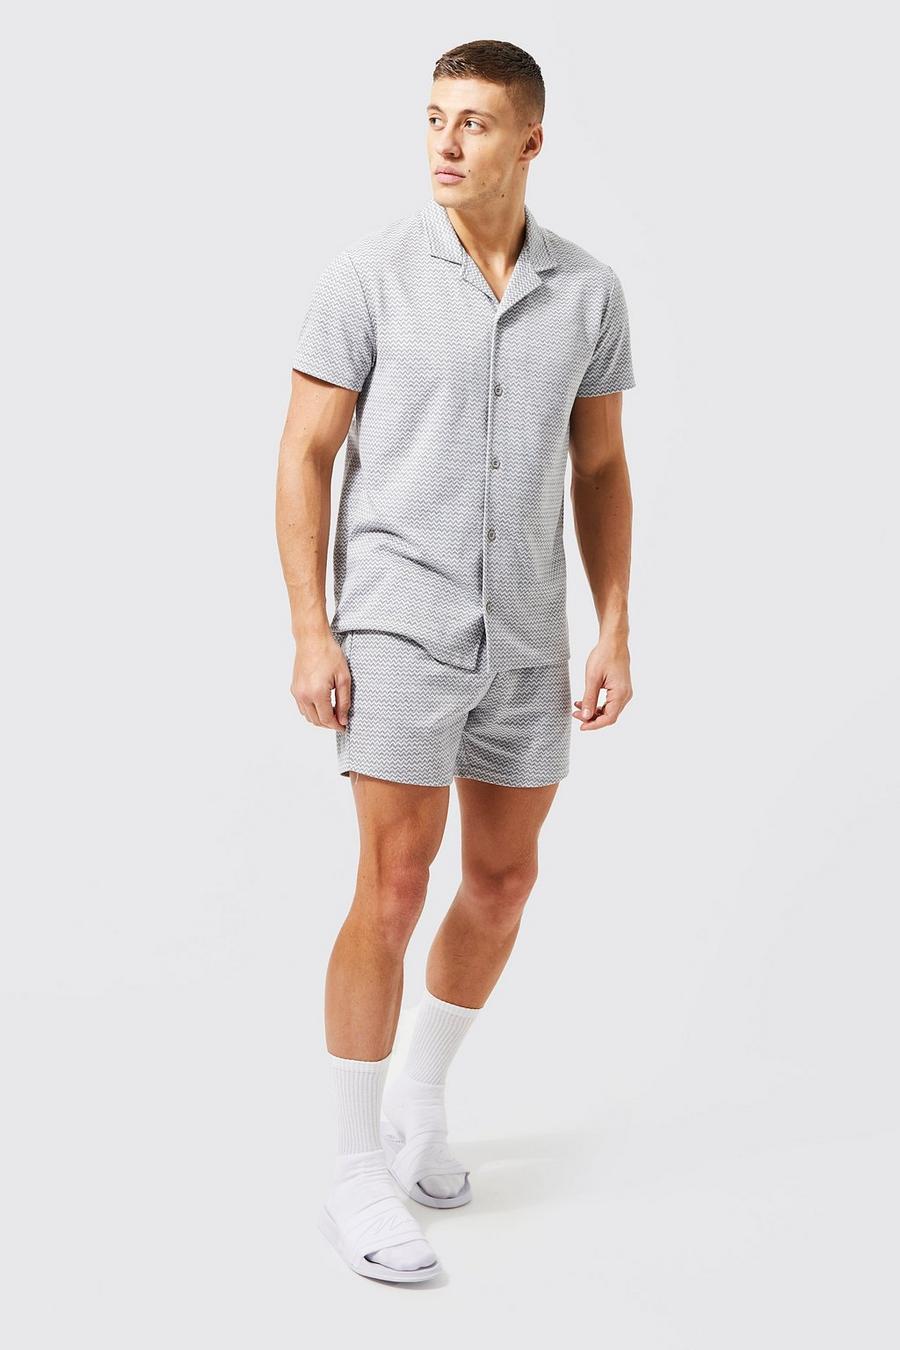 Light grey Short Sleeve Wave Jacquard Shirt And Short